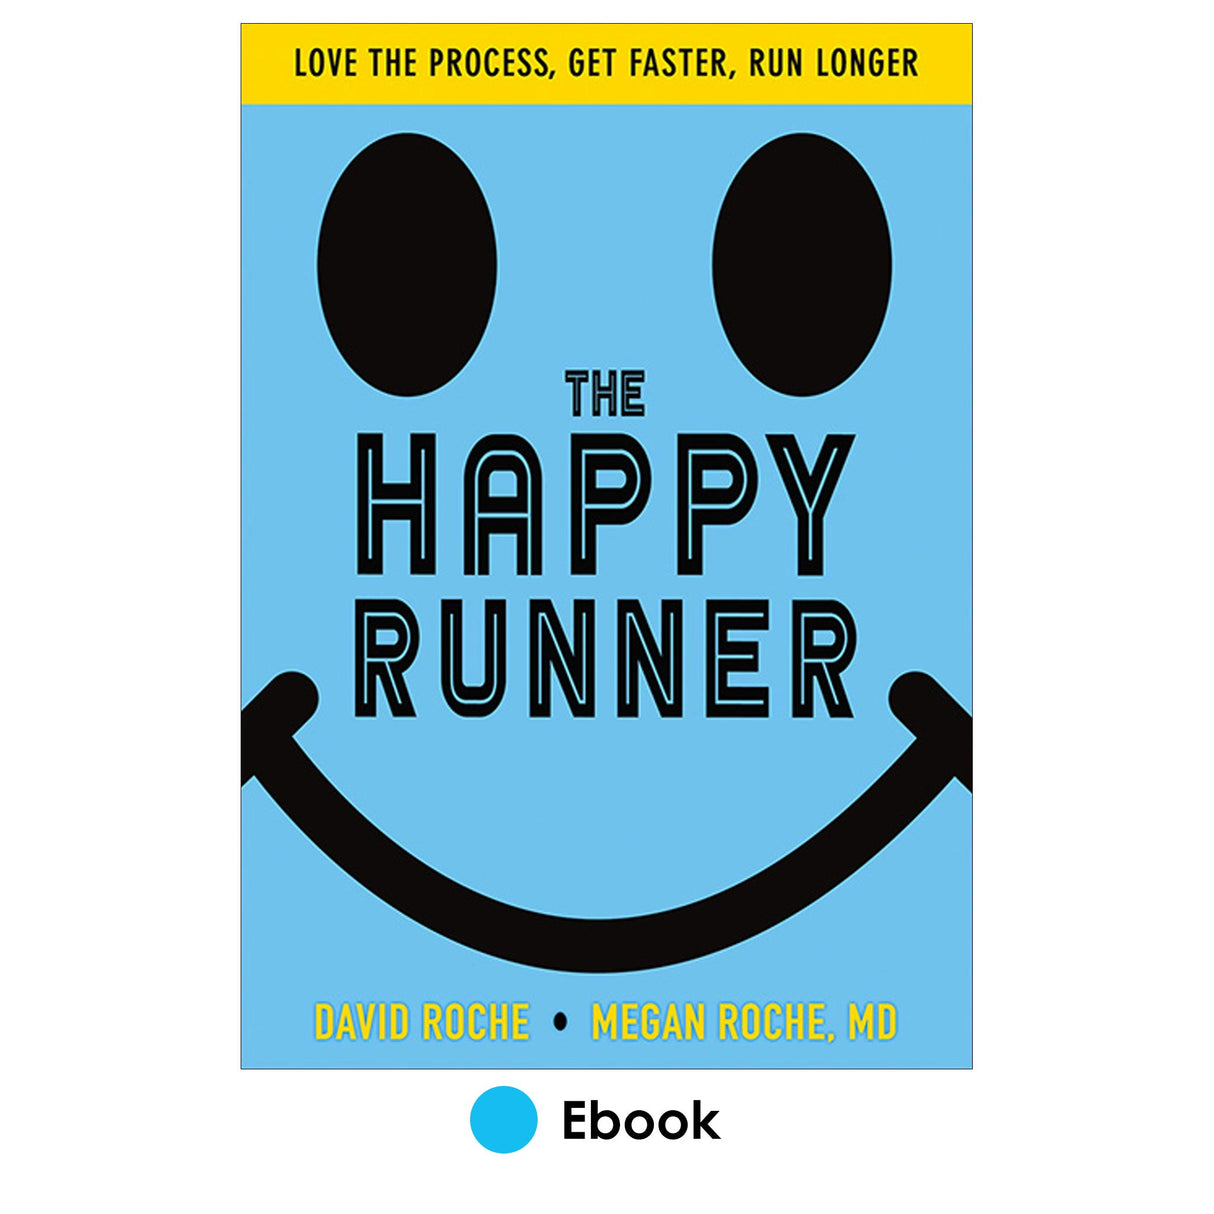 Happy Runner epub, The